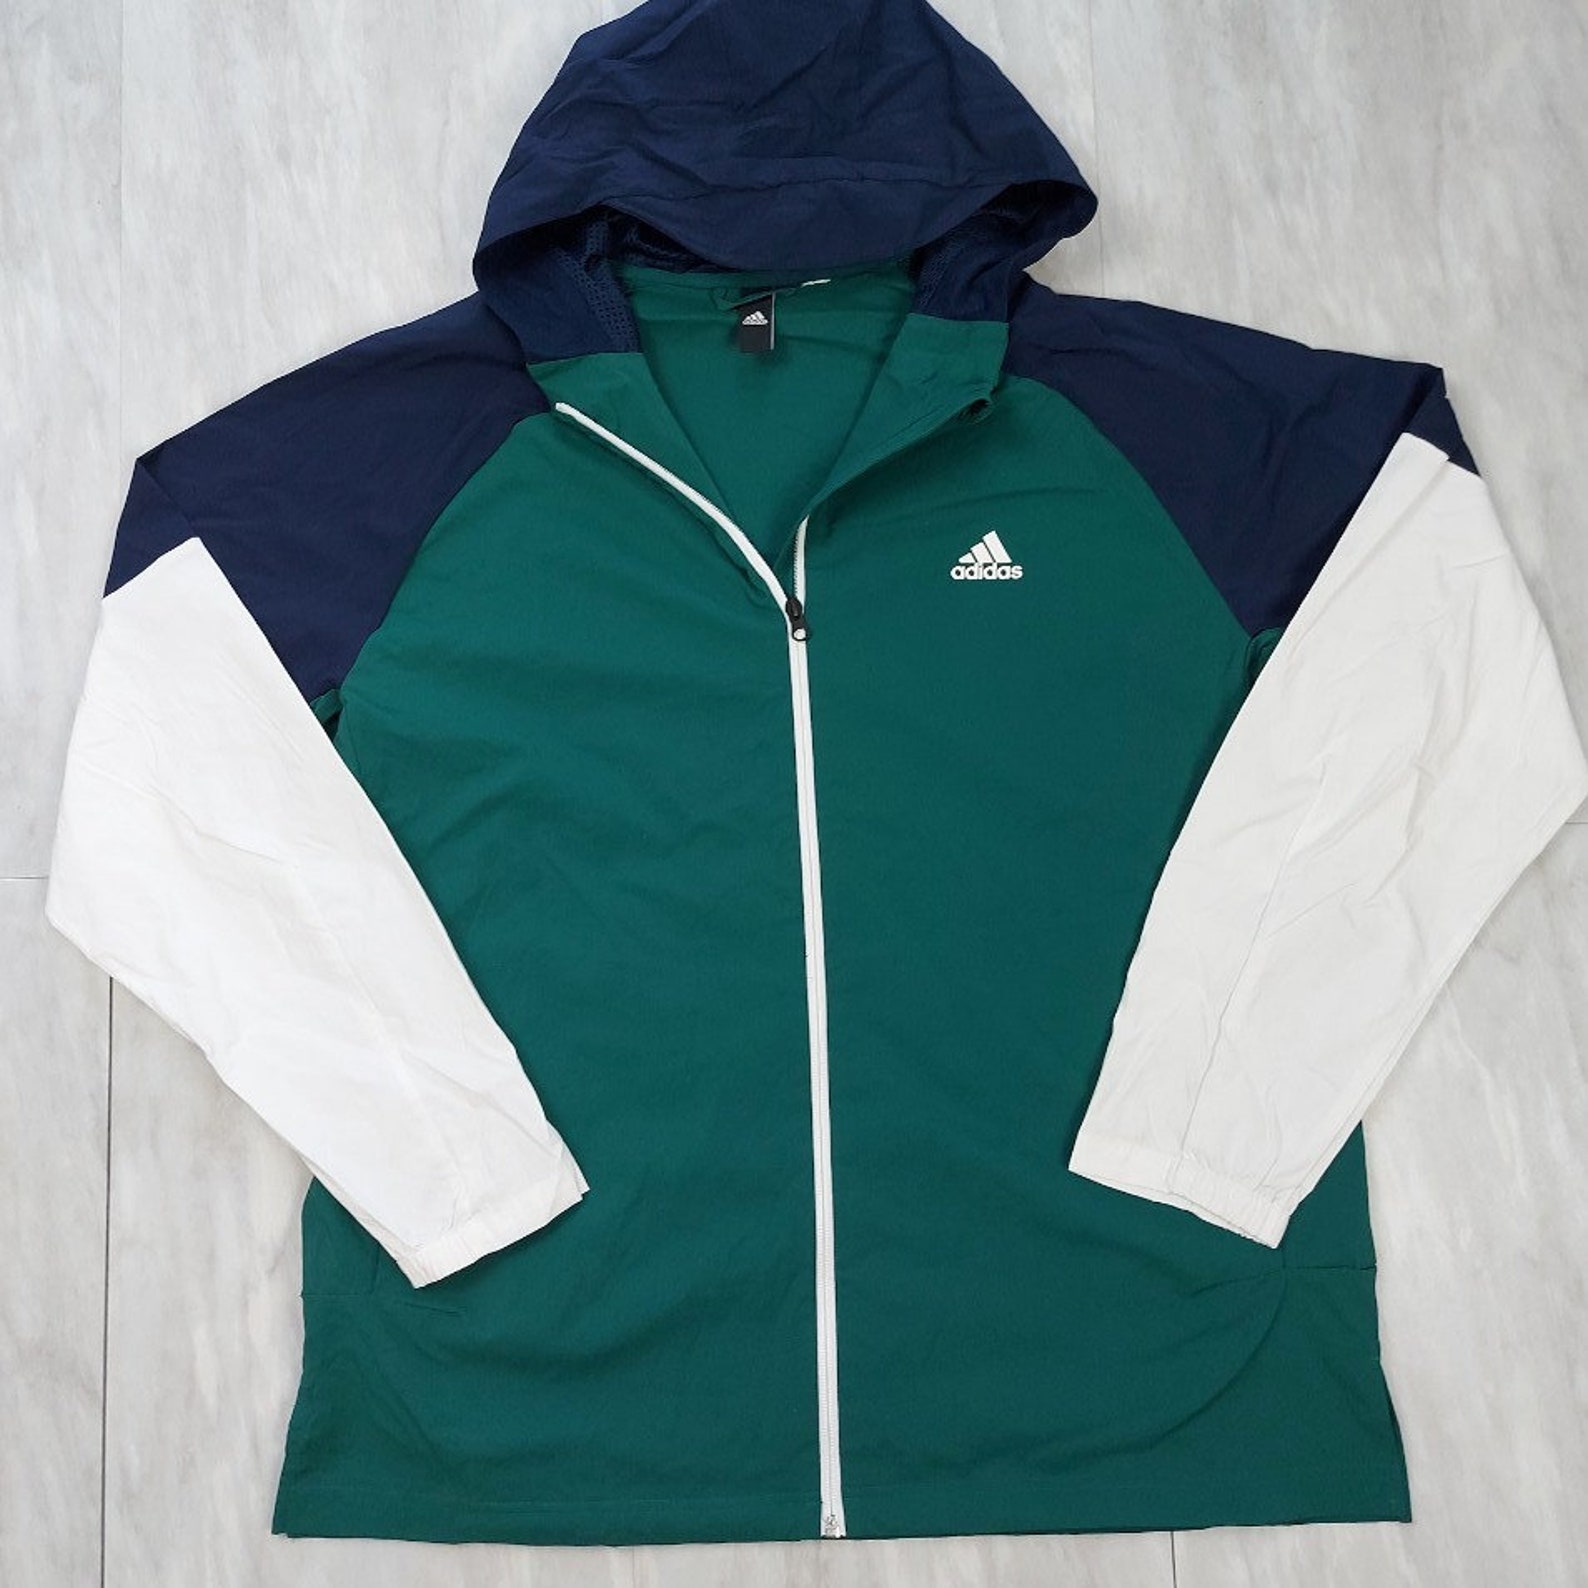 Adidas Mens Windbreaker with Hood Jacket Green Blue White | Etsy